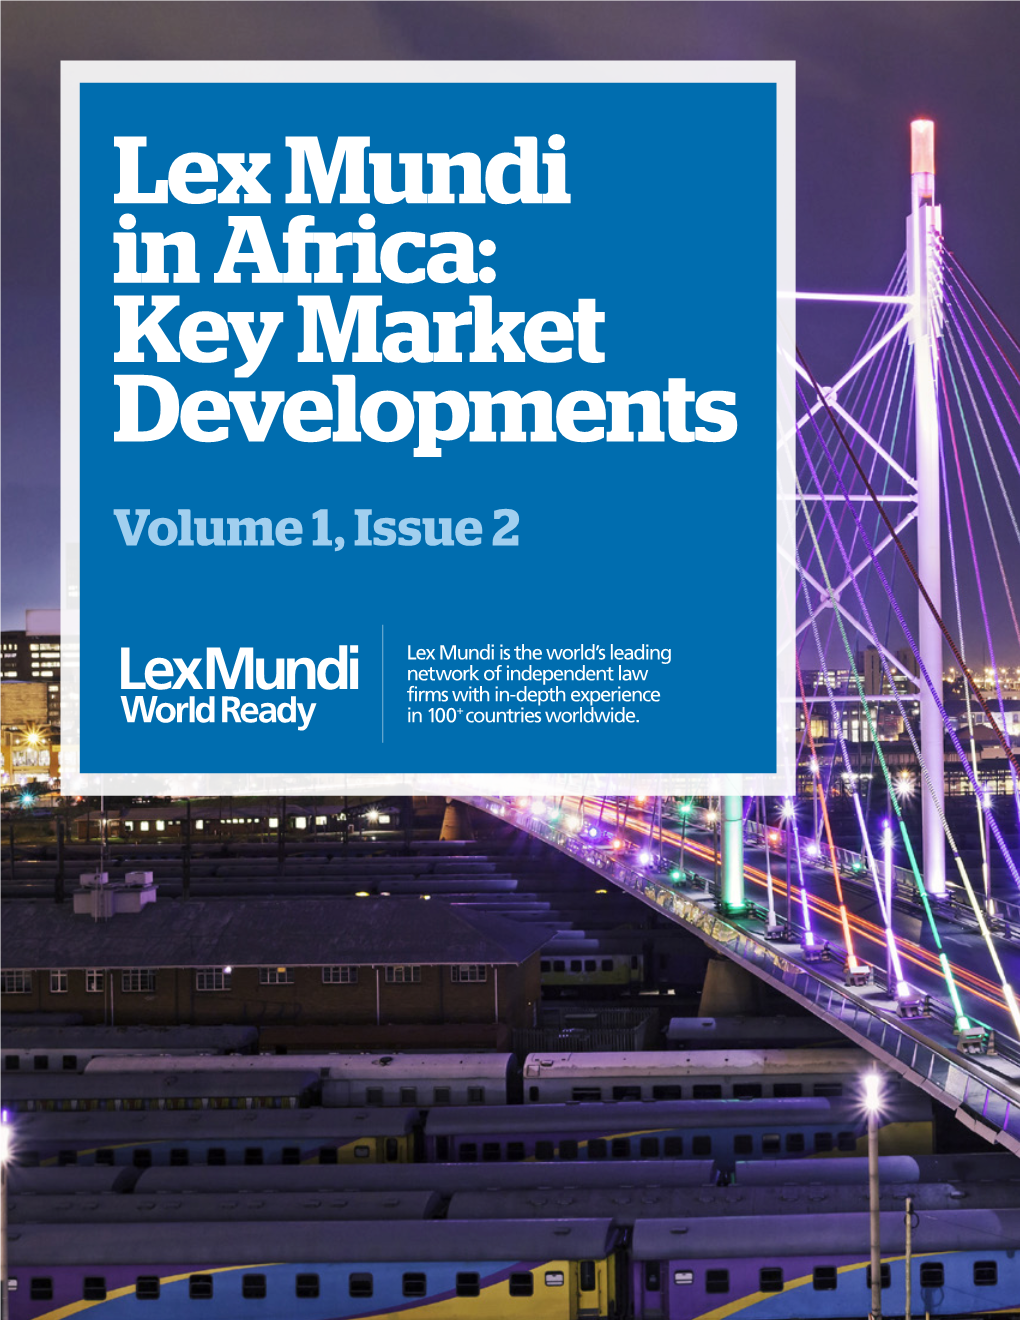 Lex Mundi in Africa: Key Market Developments Volume 1, Issue 2 Your World Ready Partner in Africa